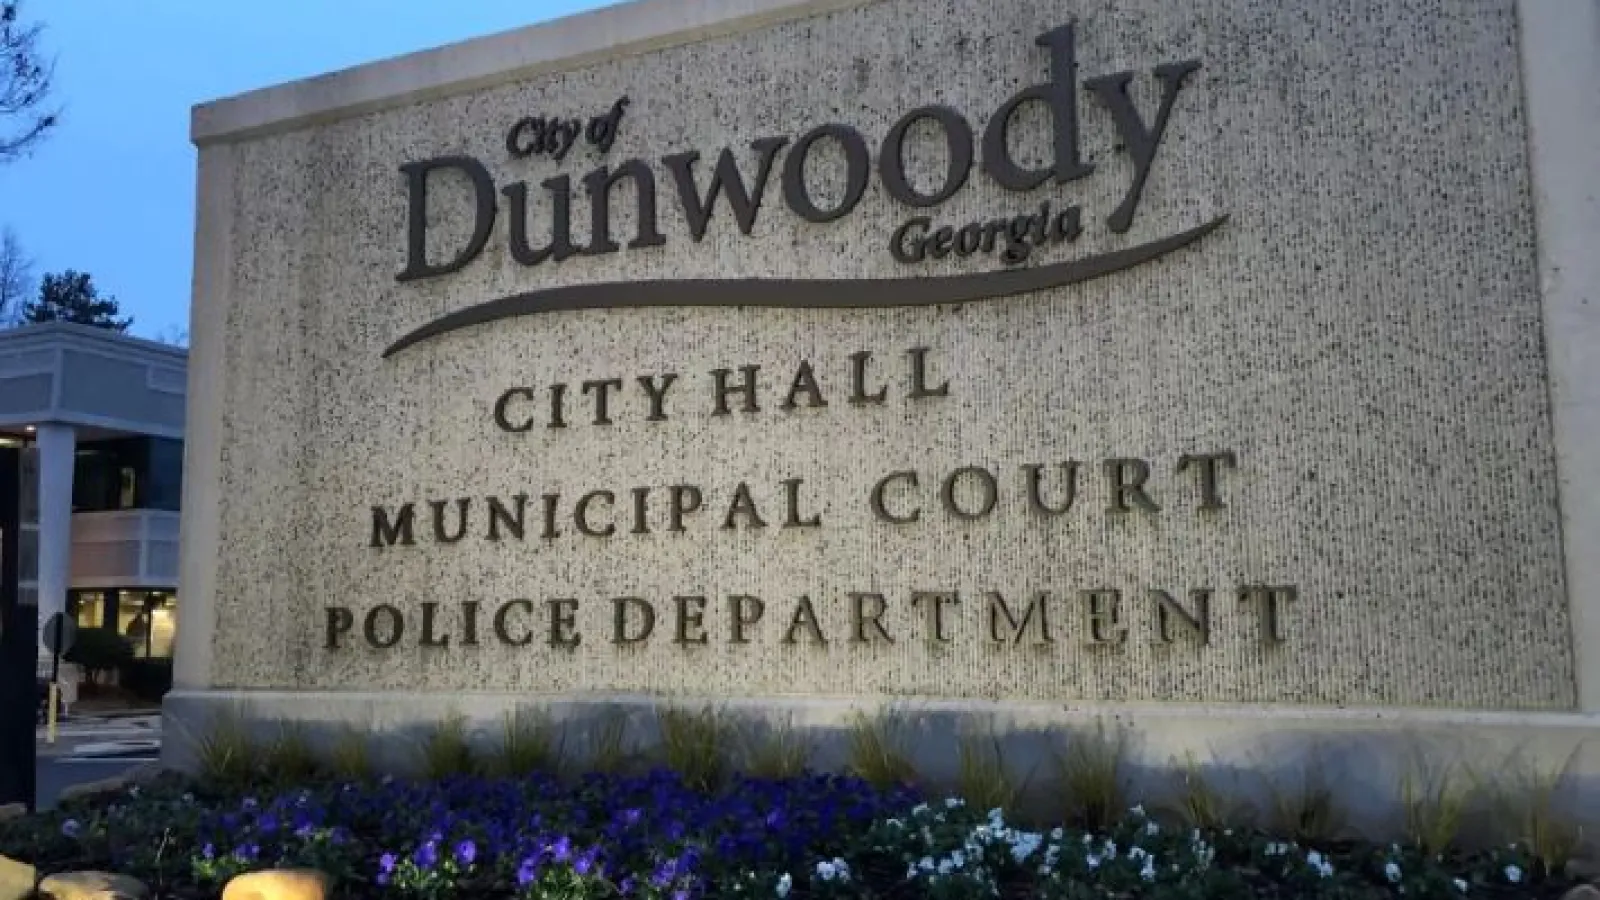 Dunwoody sign